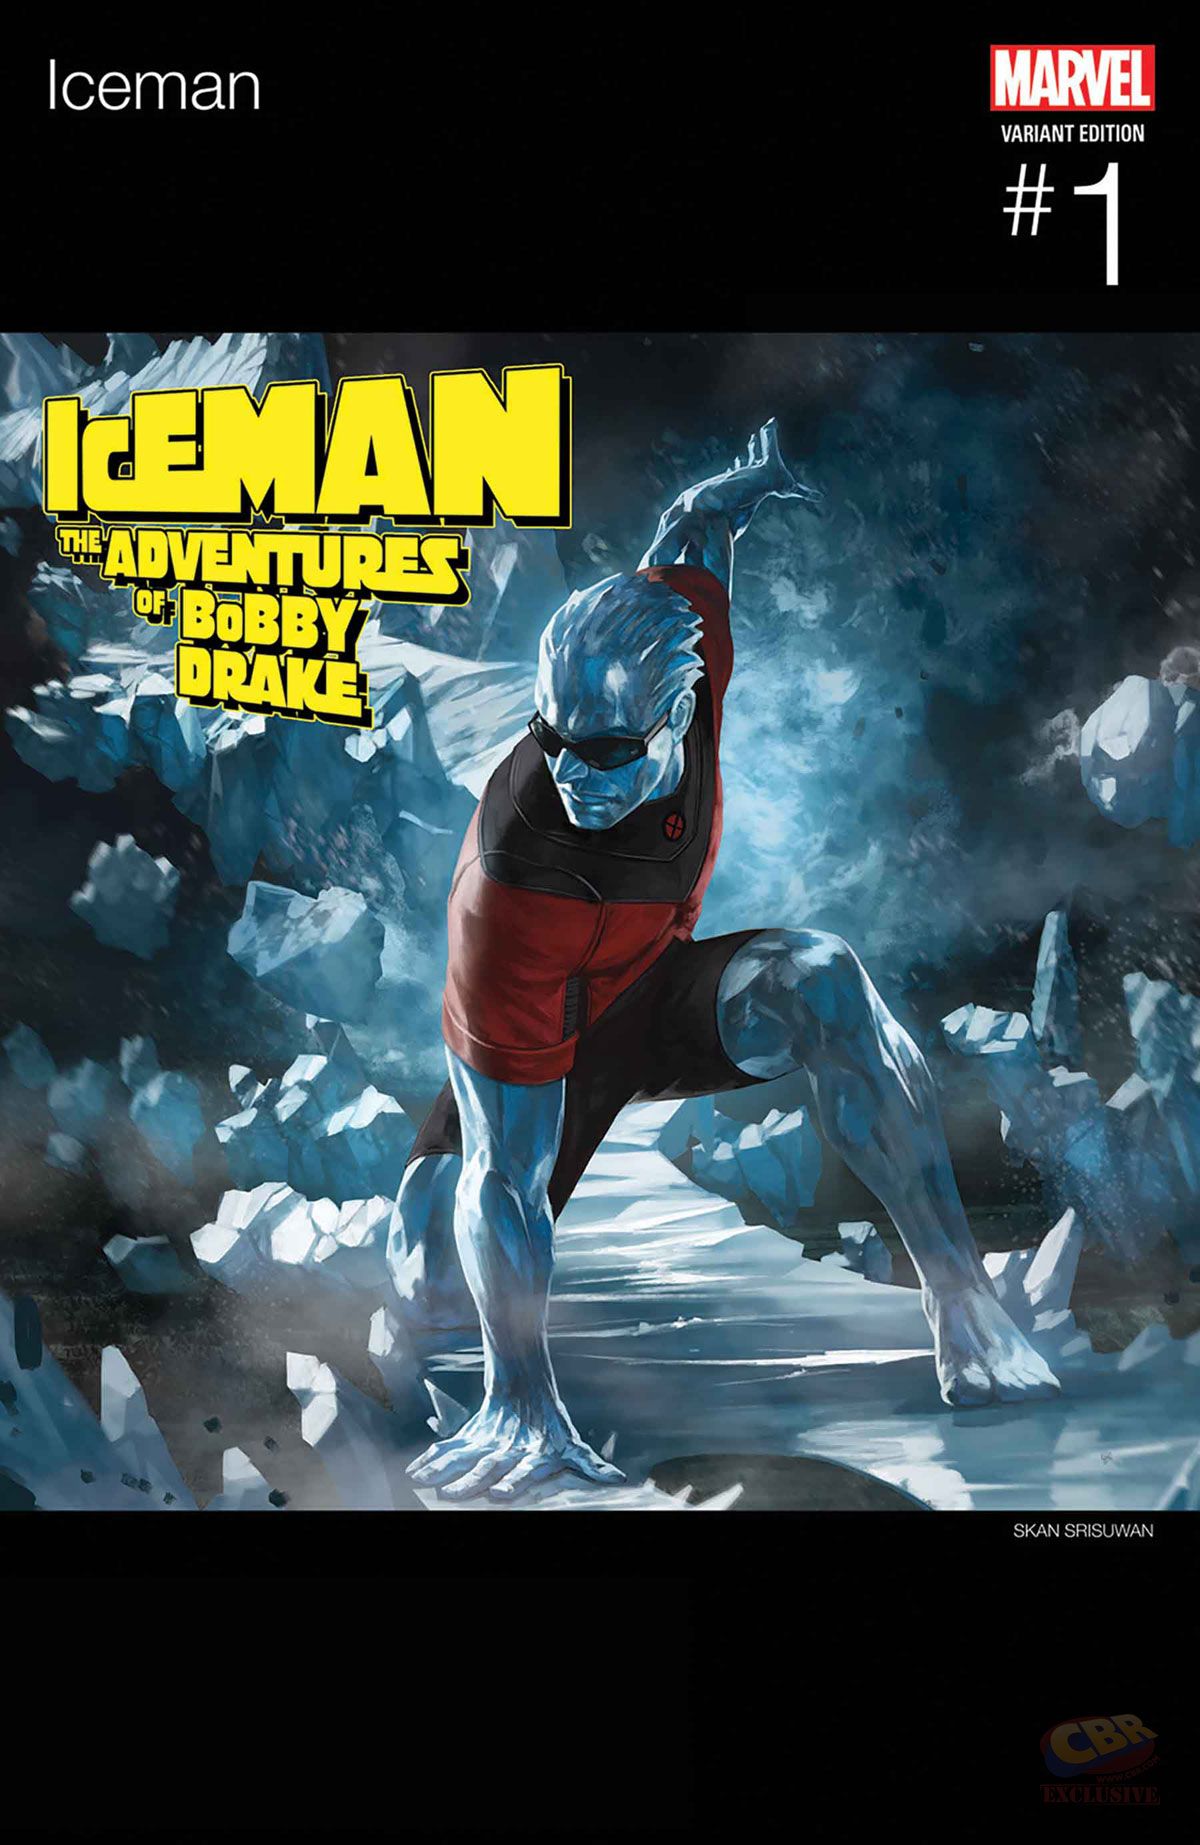 Iceman #1 hip-hop variant